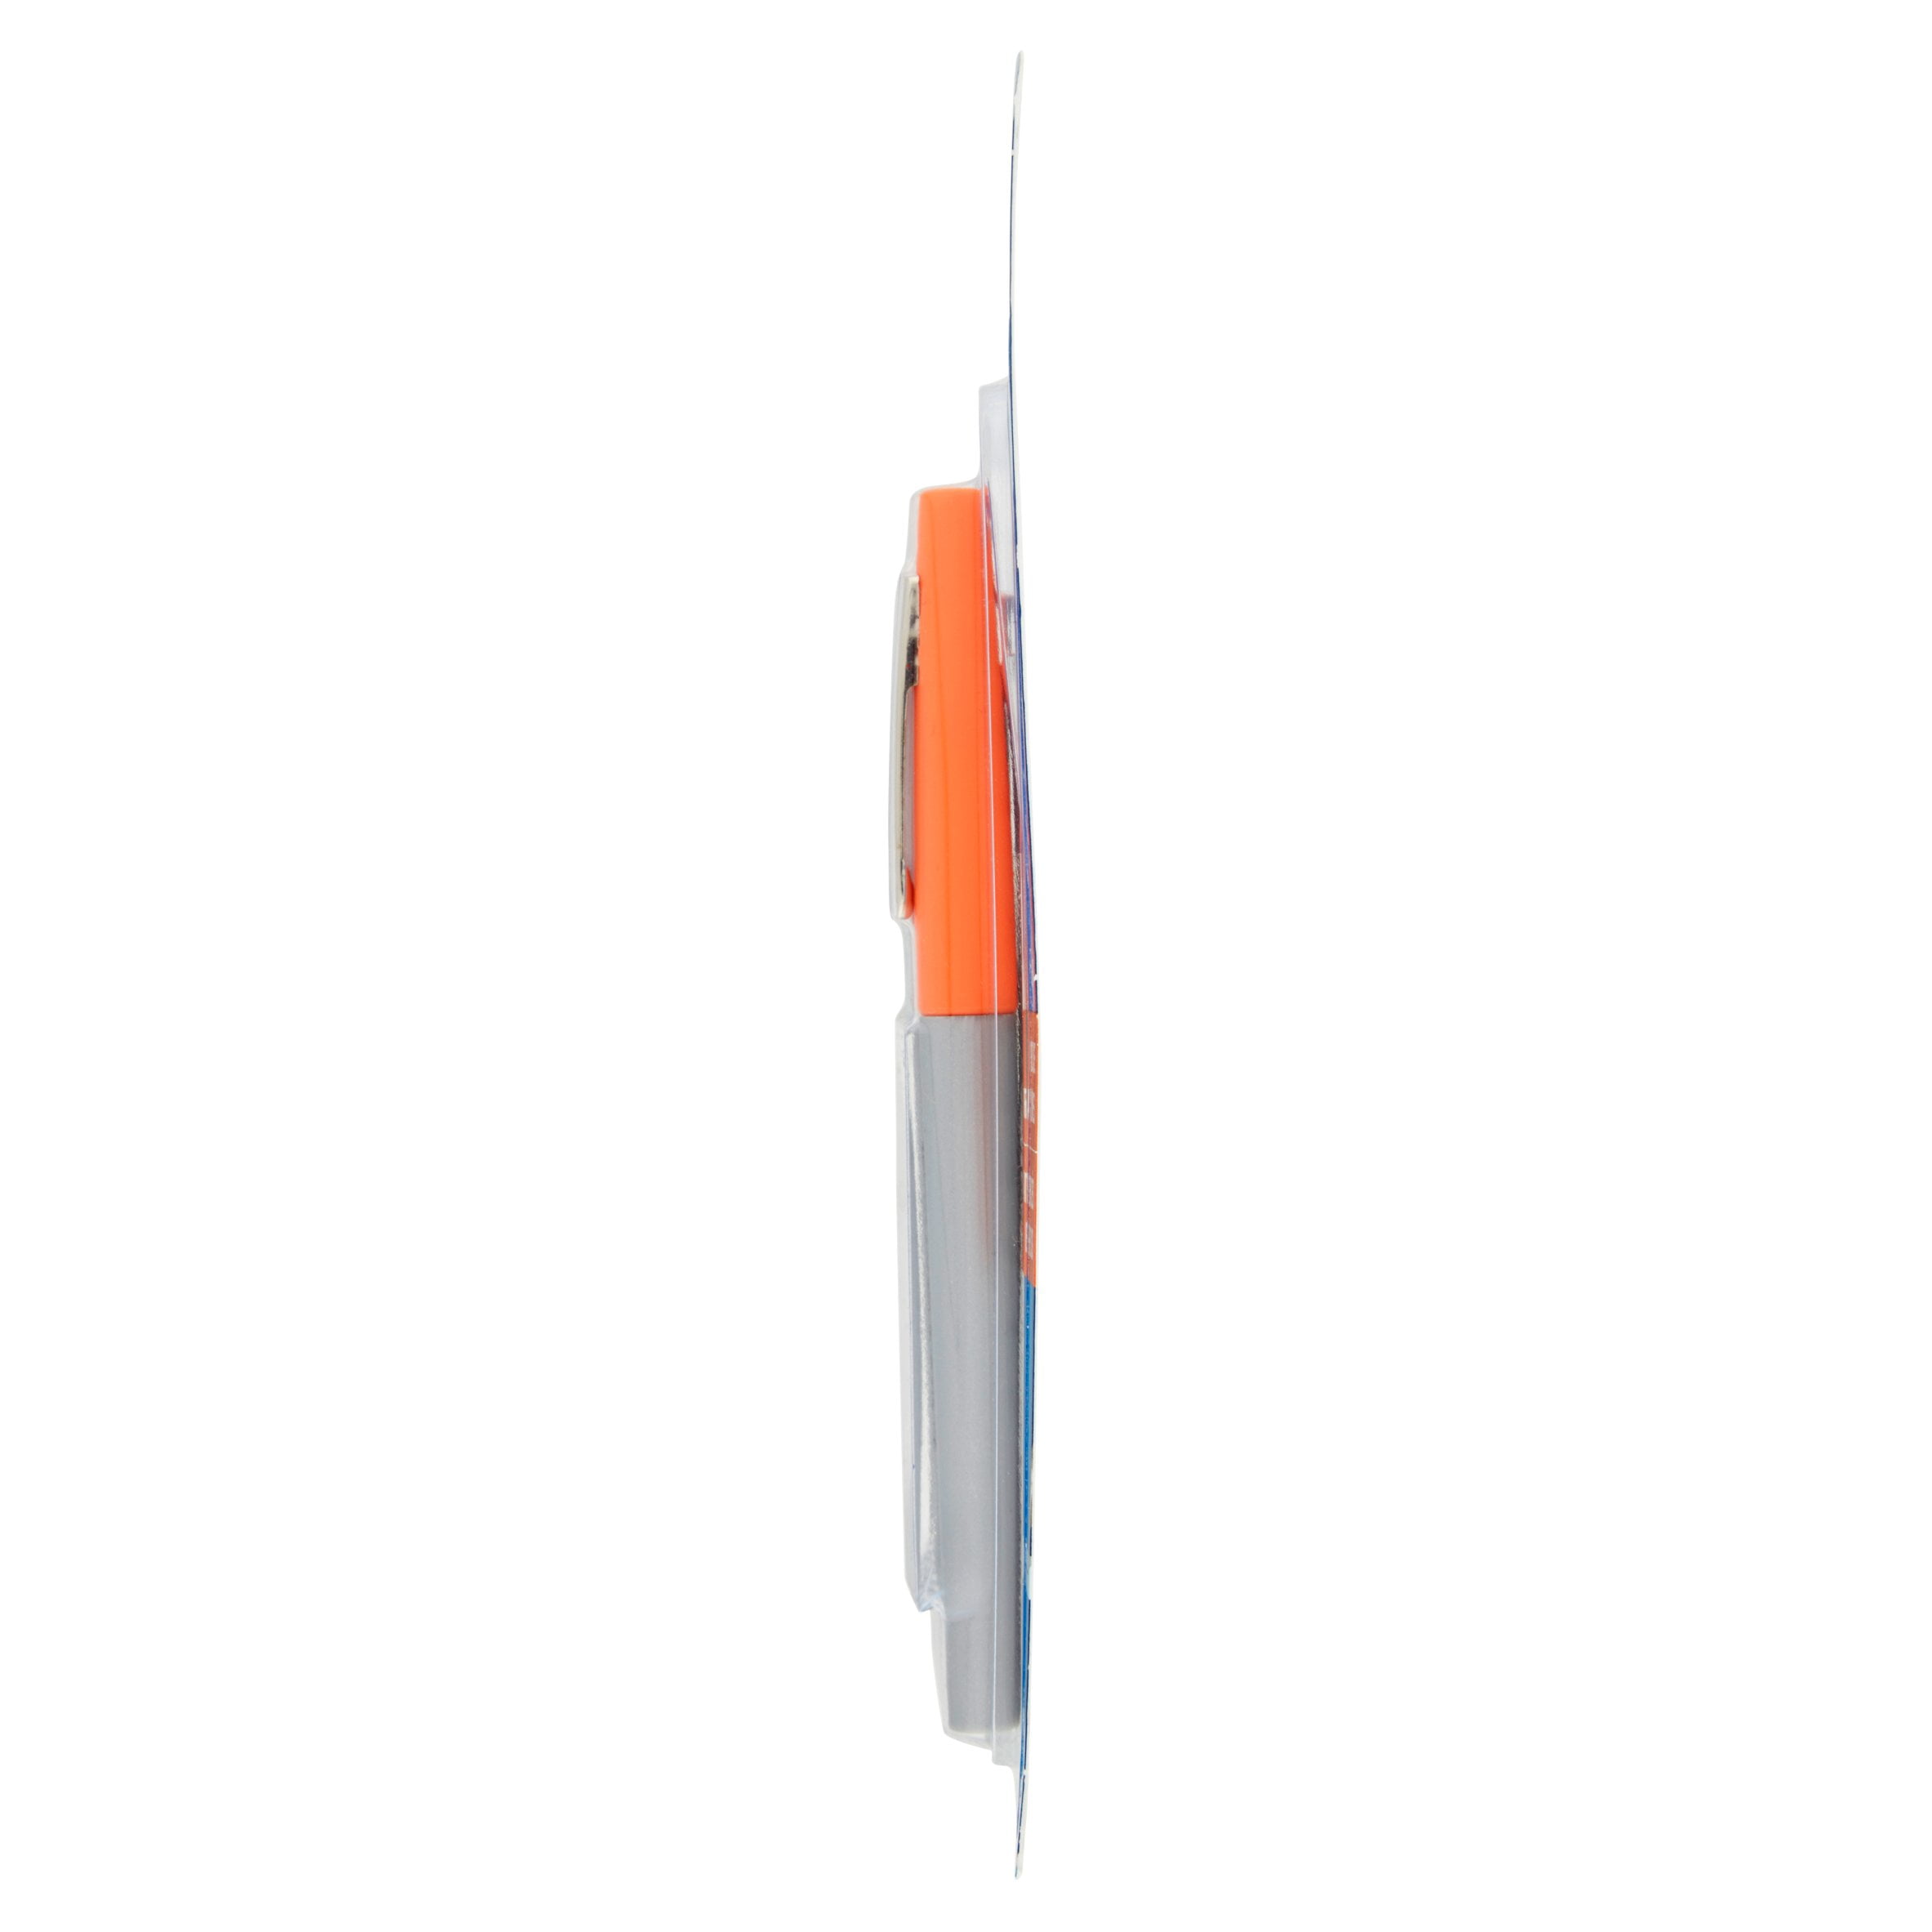 JetPens.com - Paper Mate Flair Felt Tip Pen - Ultra Fine Point - 8 Color  Set